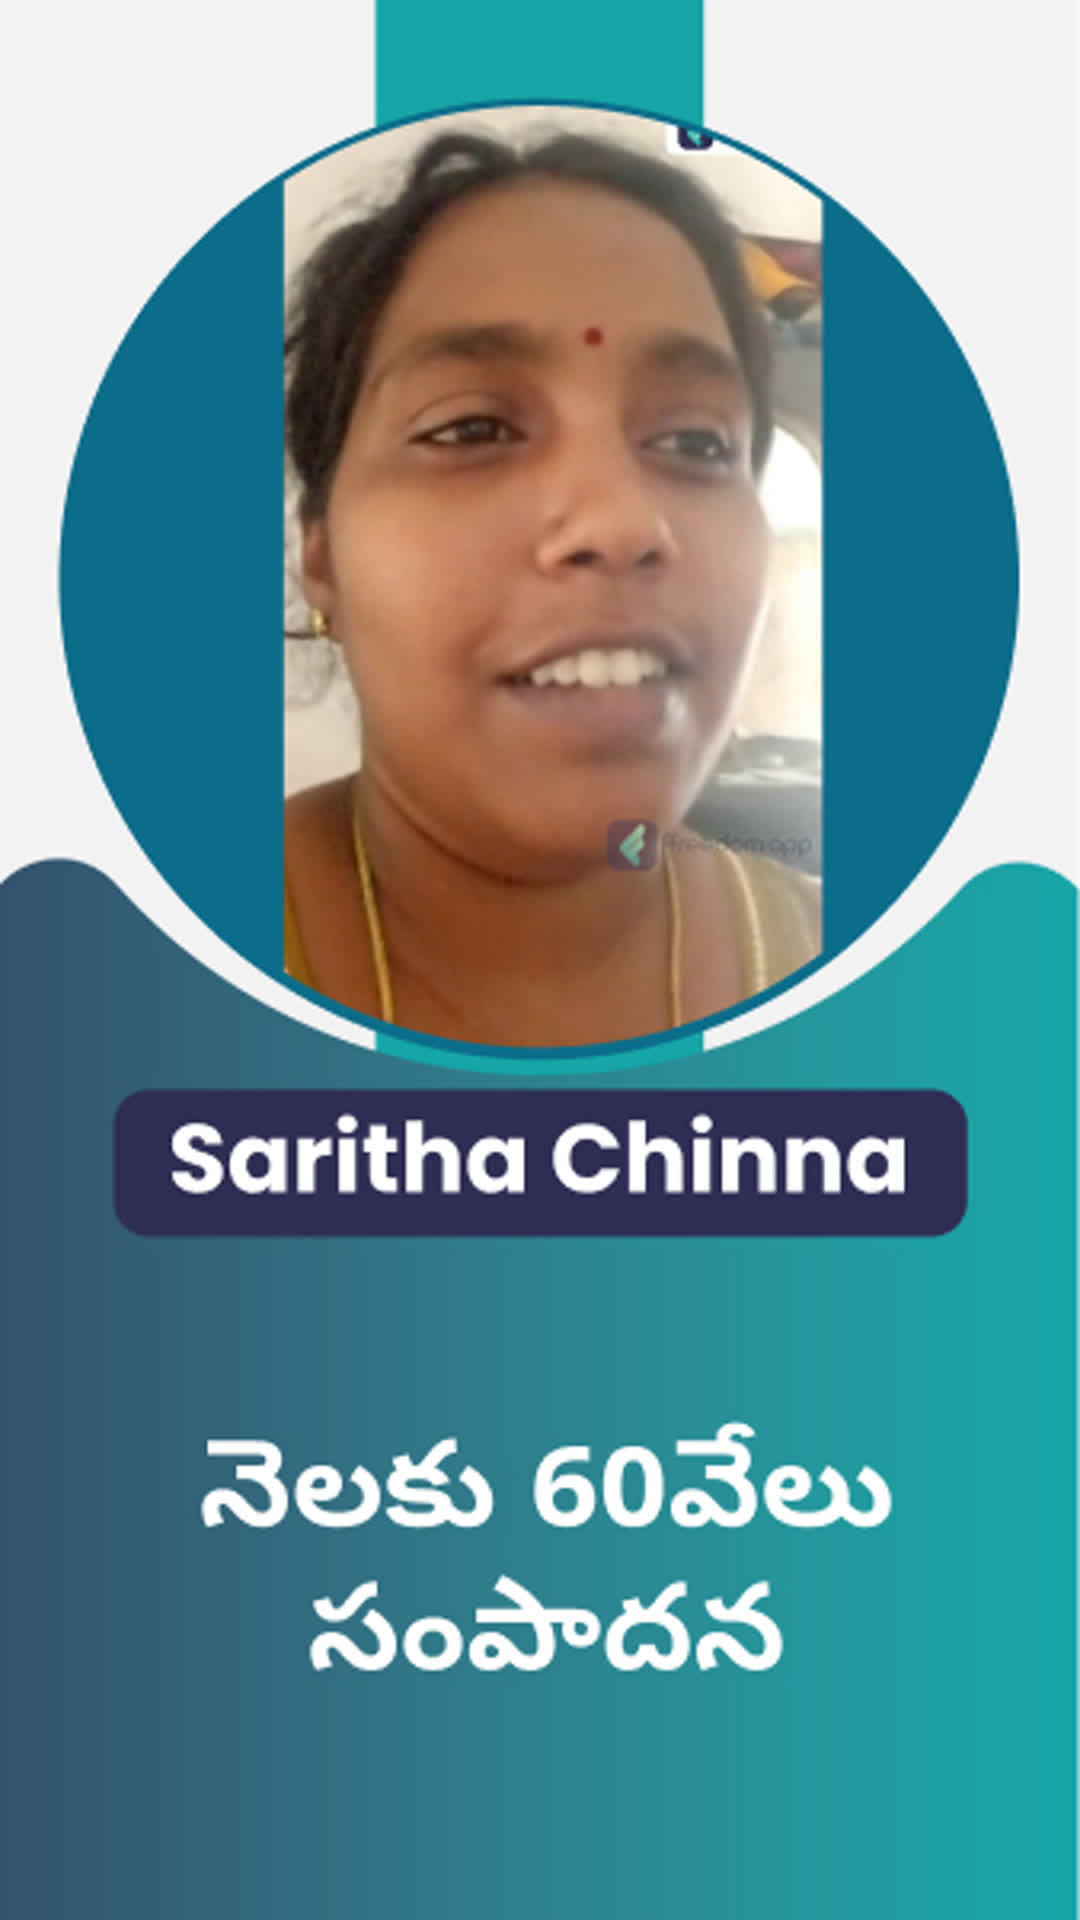 M.Saritha rani's Honest Review of ffreedom app - Kurnool ,Telangana